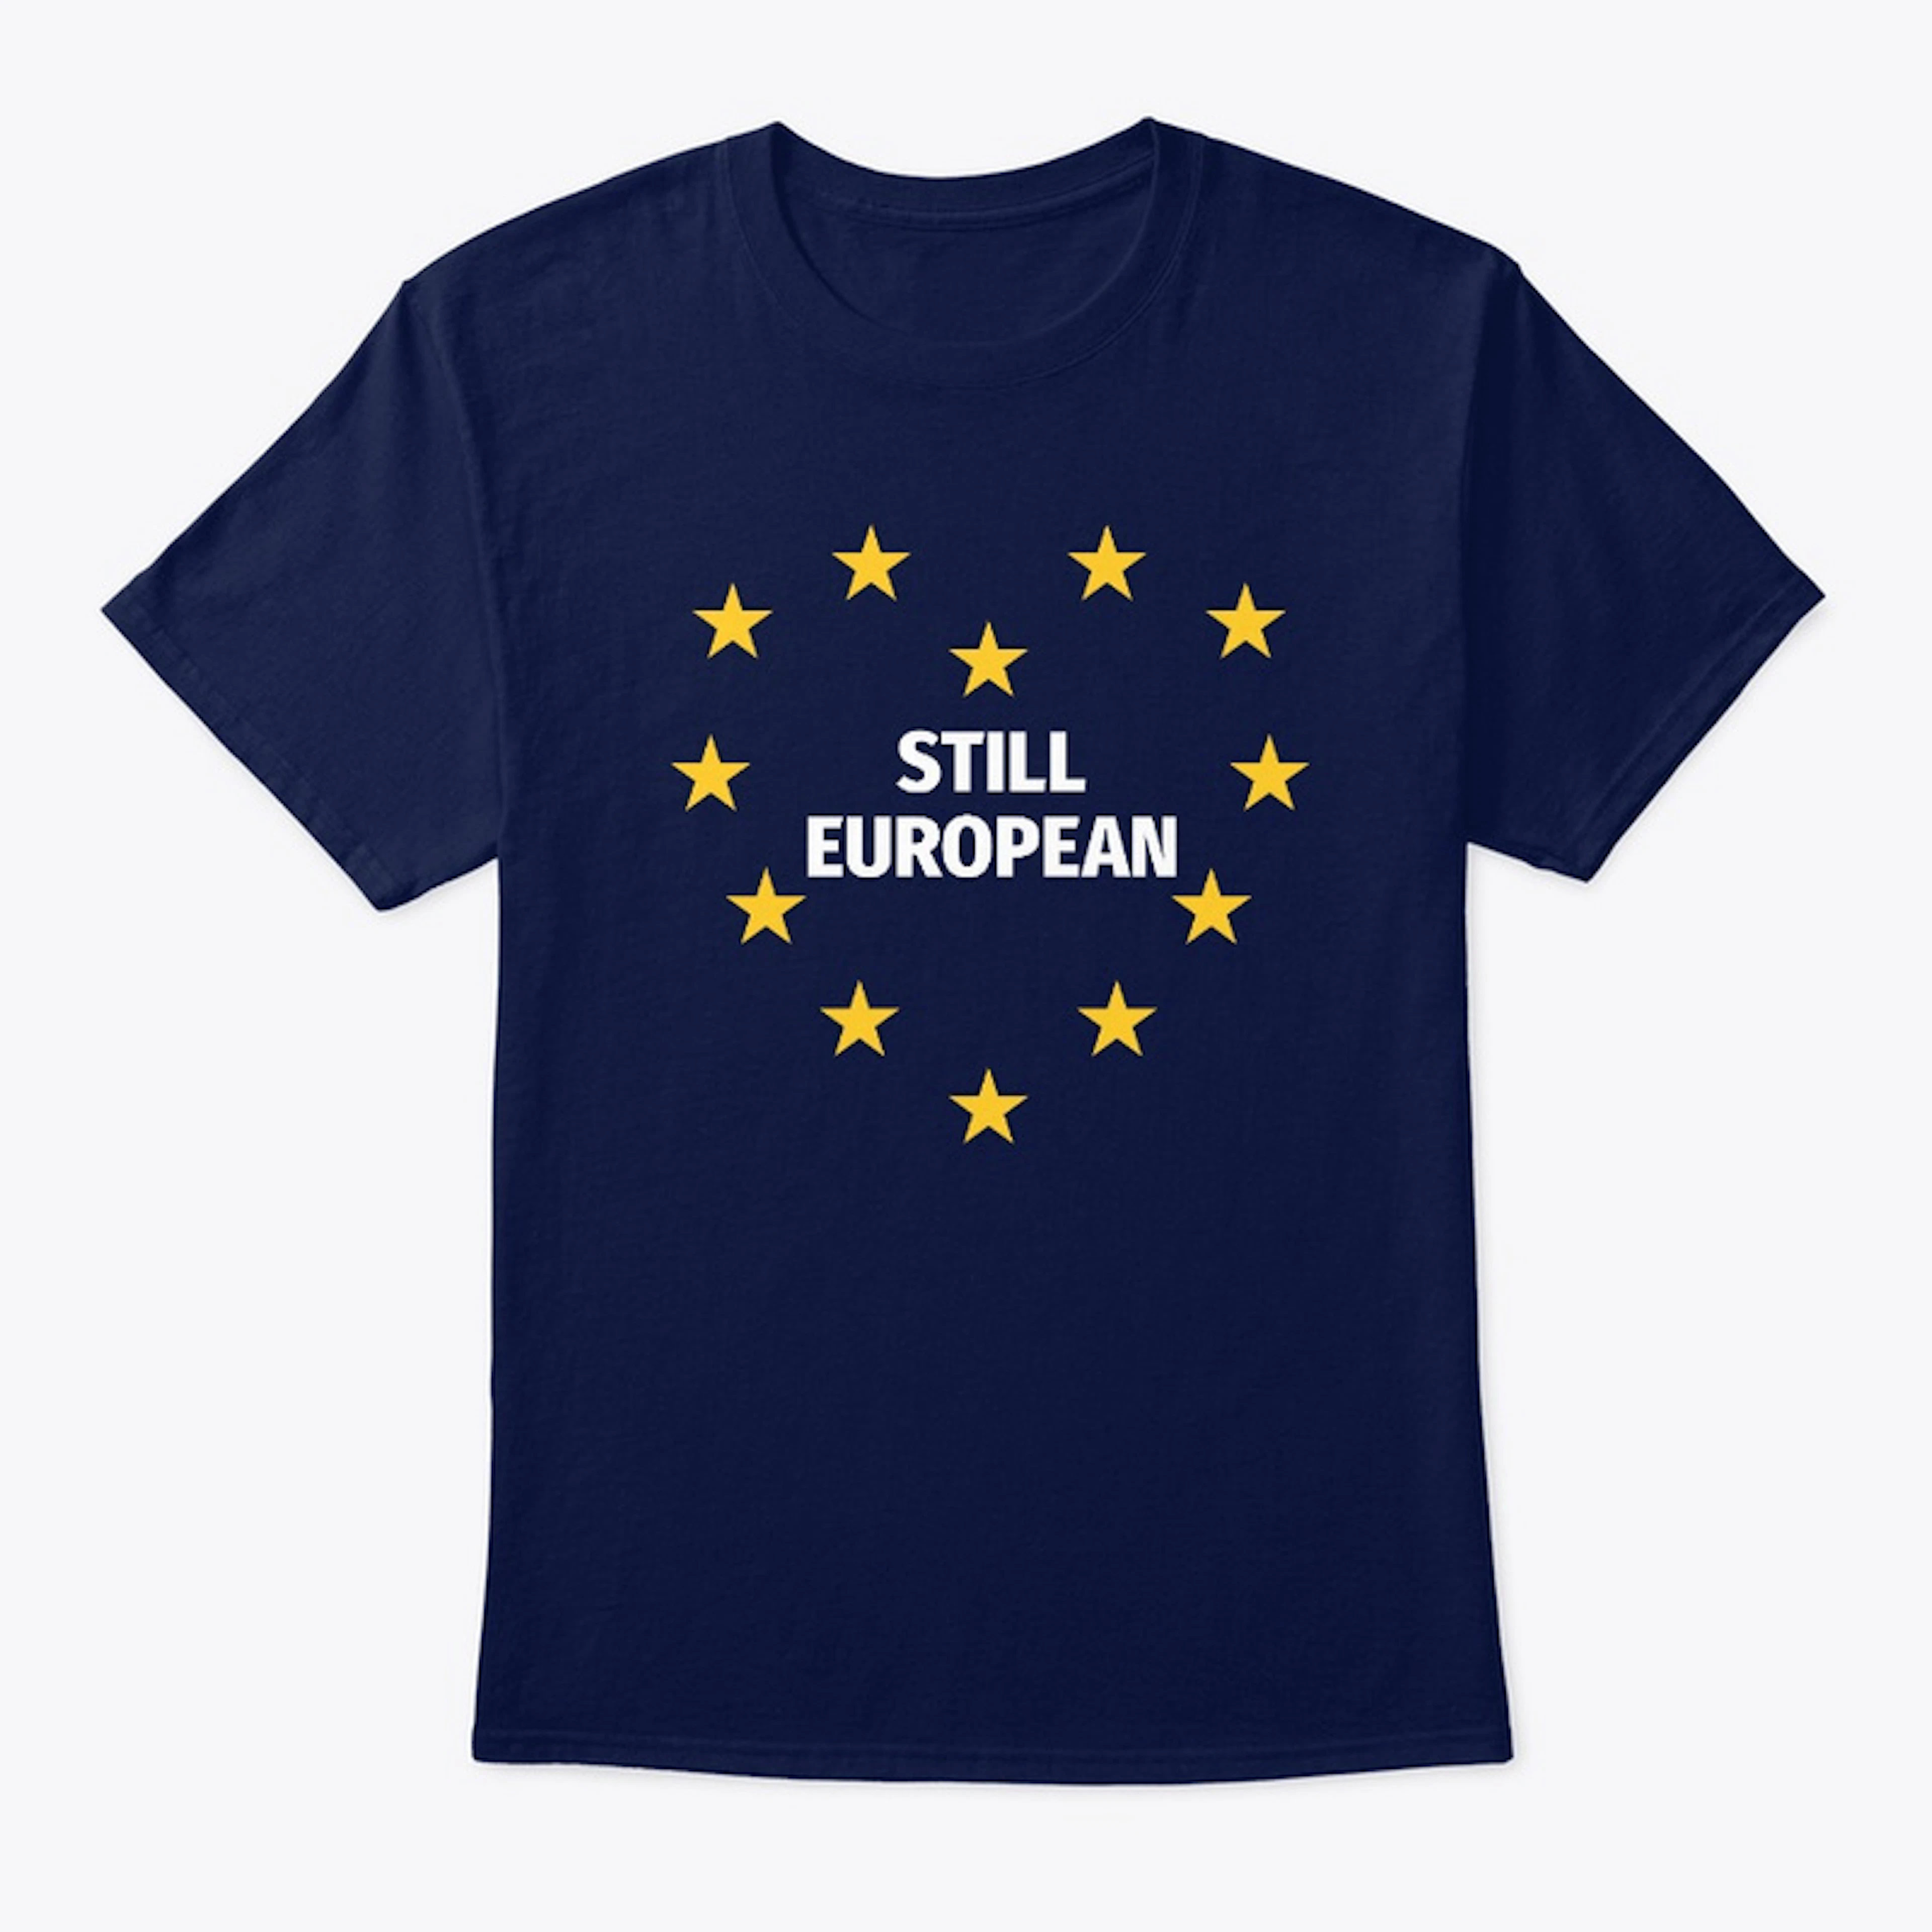 Still European Haven't Left the EU Yet